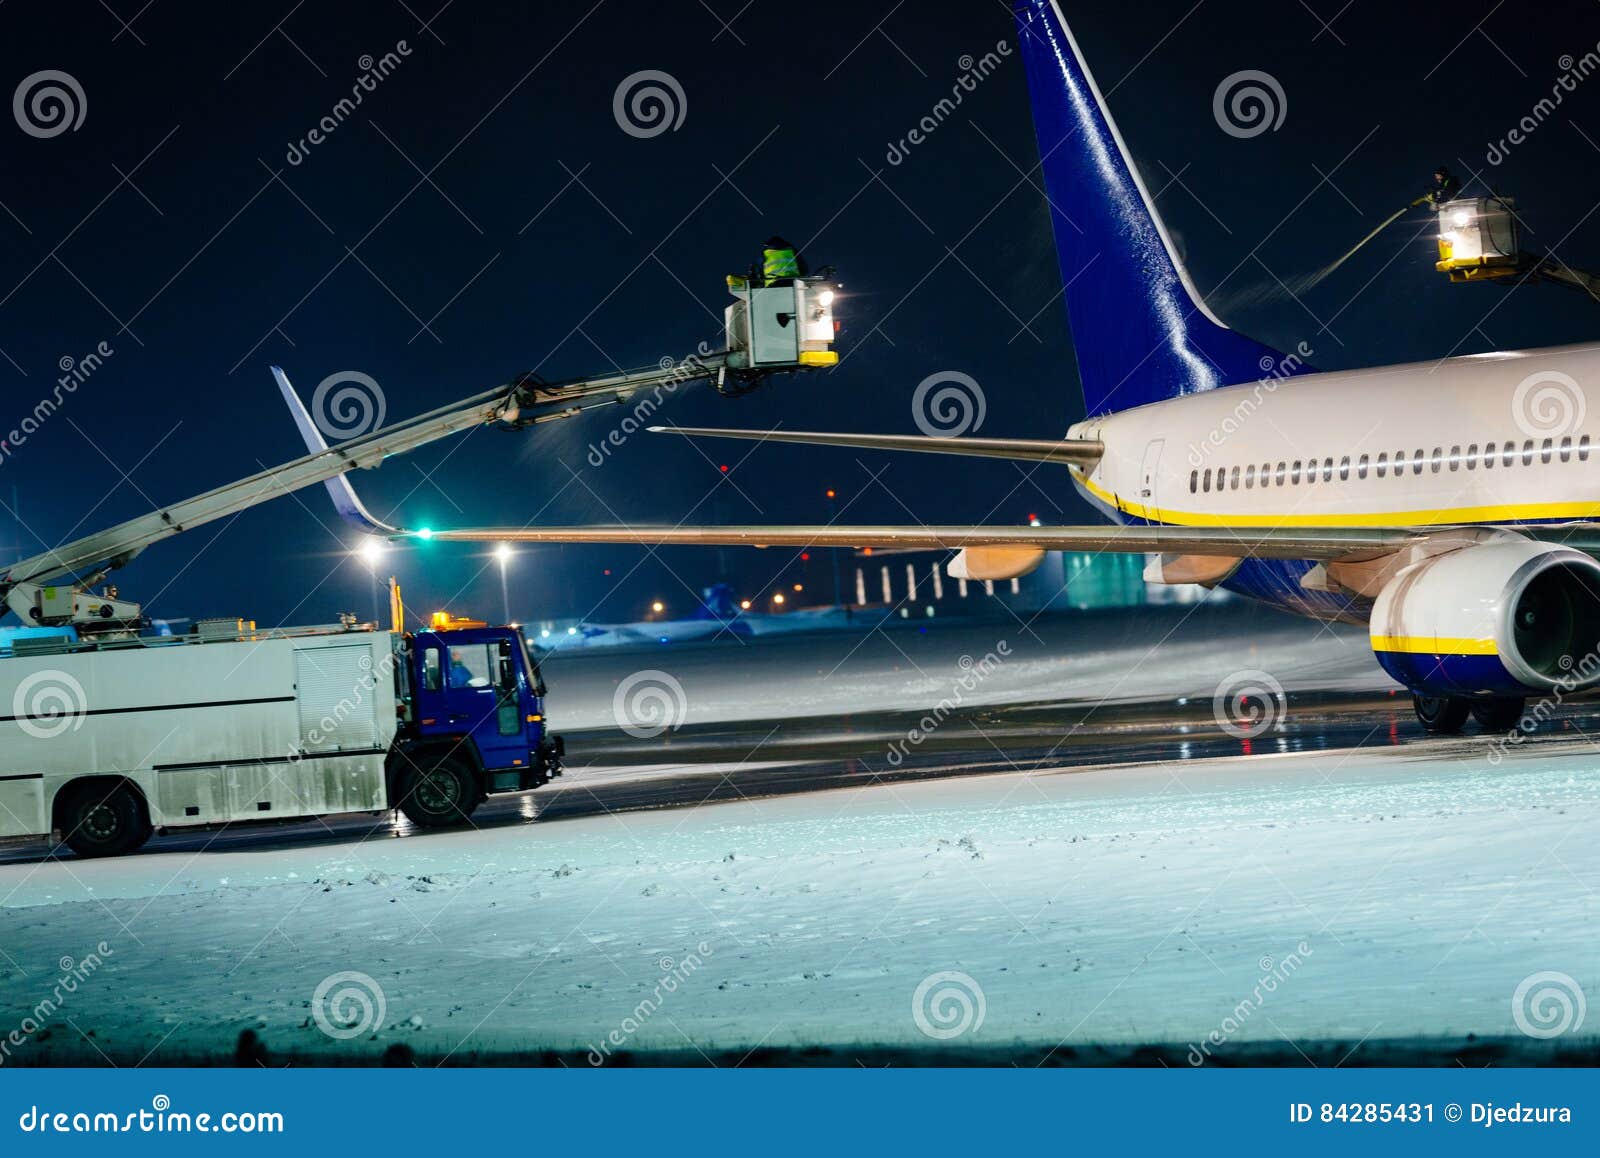 https://thumbs.dreamstime.com/z/deicing-passenger-airplane-heavy-snow-night-84285431.jpg